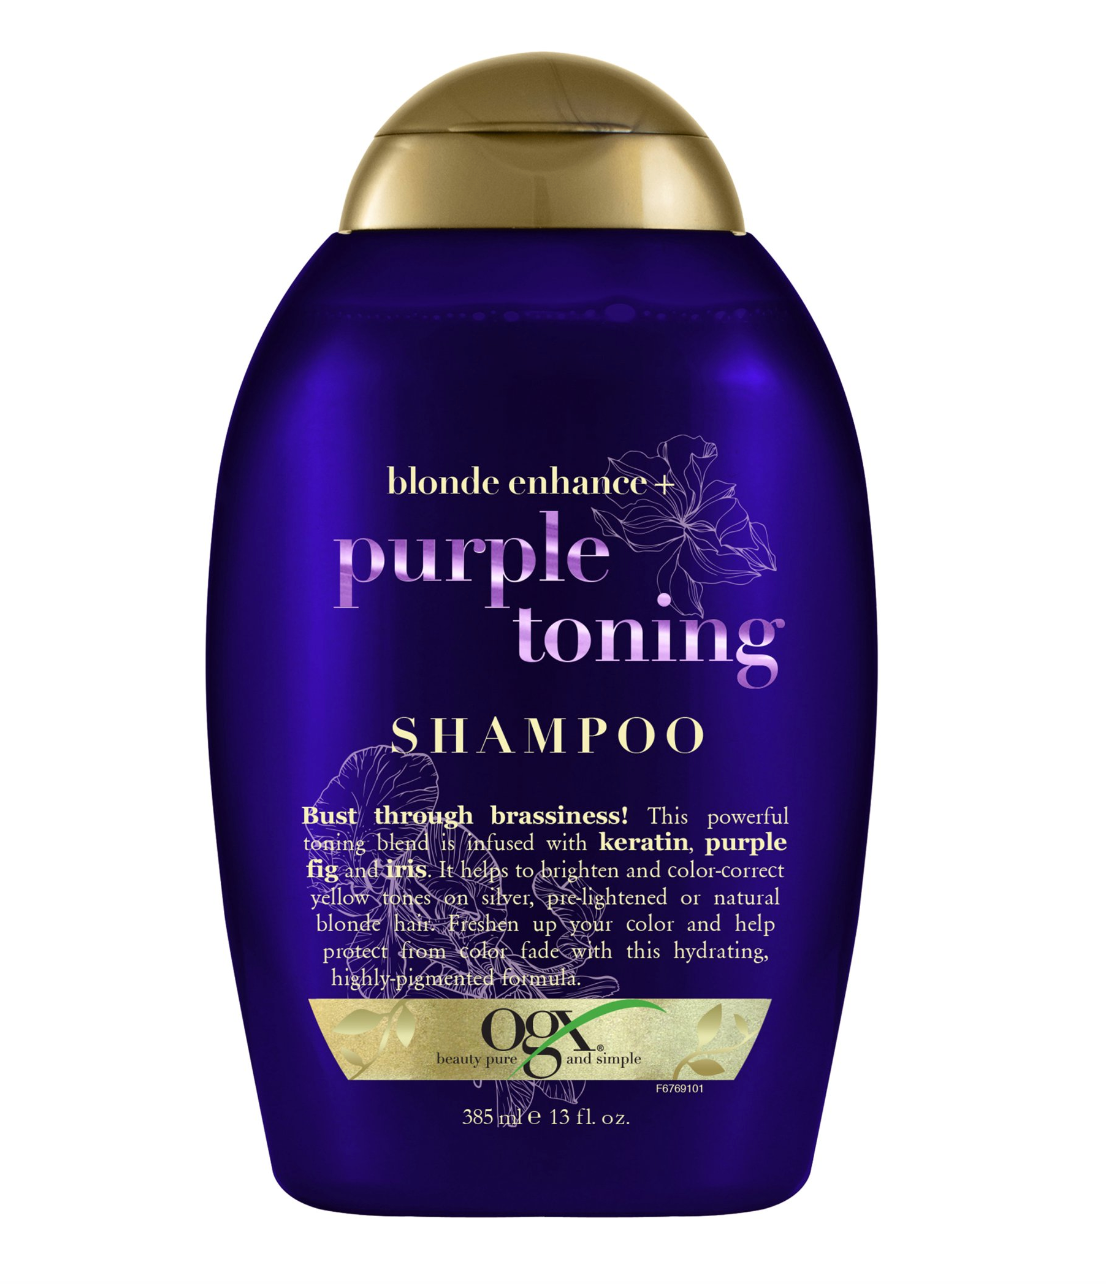 Ogx Blonde Enhanced + Purple Toning Shampoo